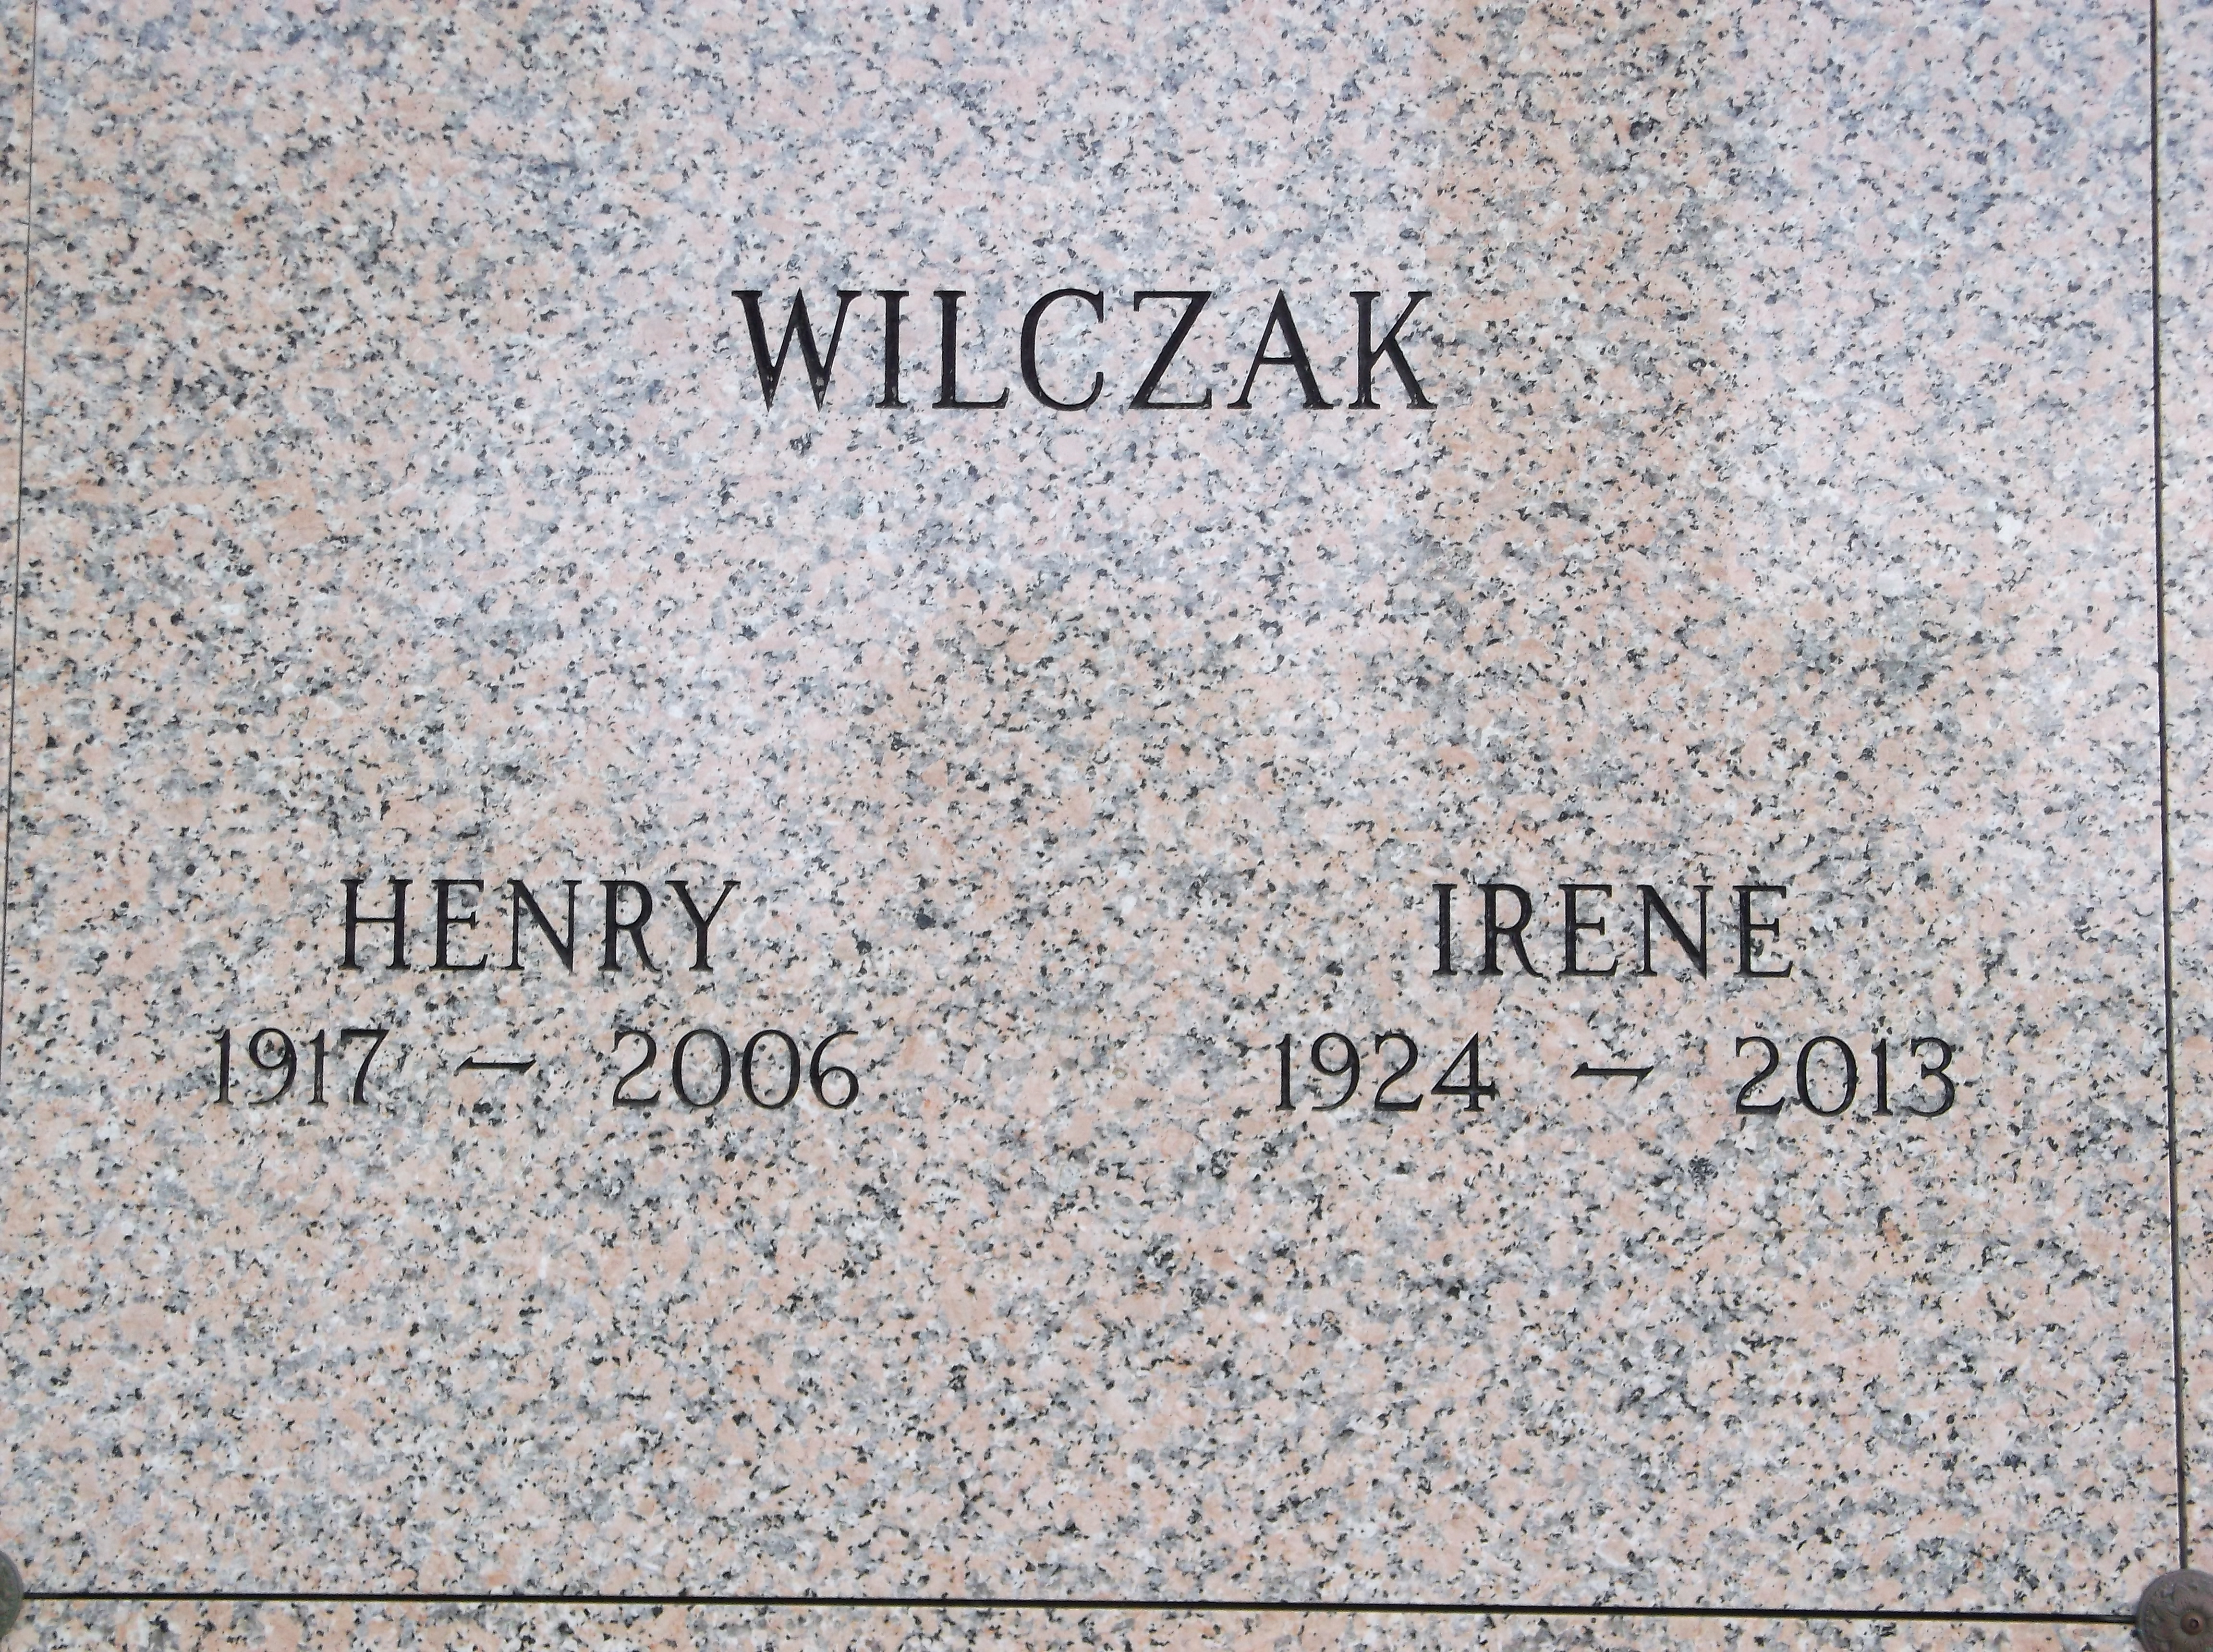 Henry Wilczak